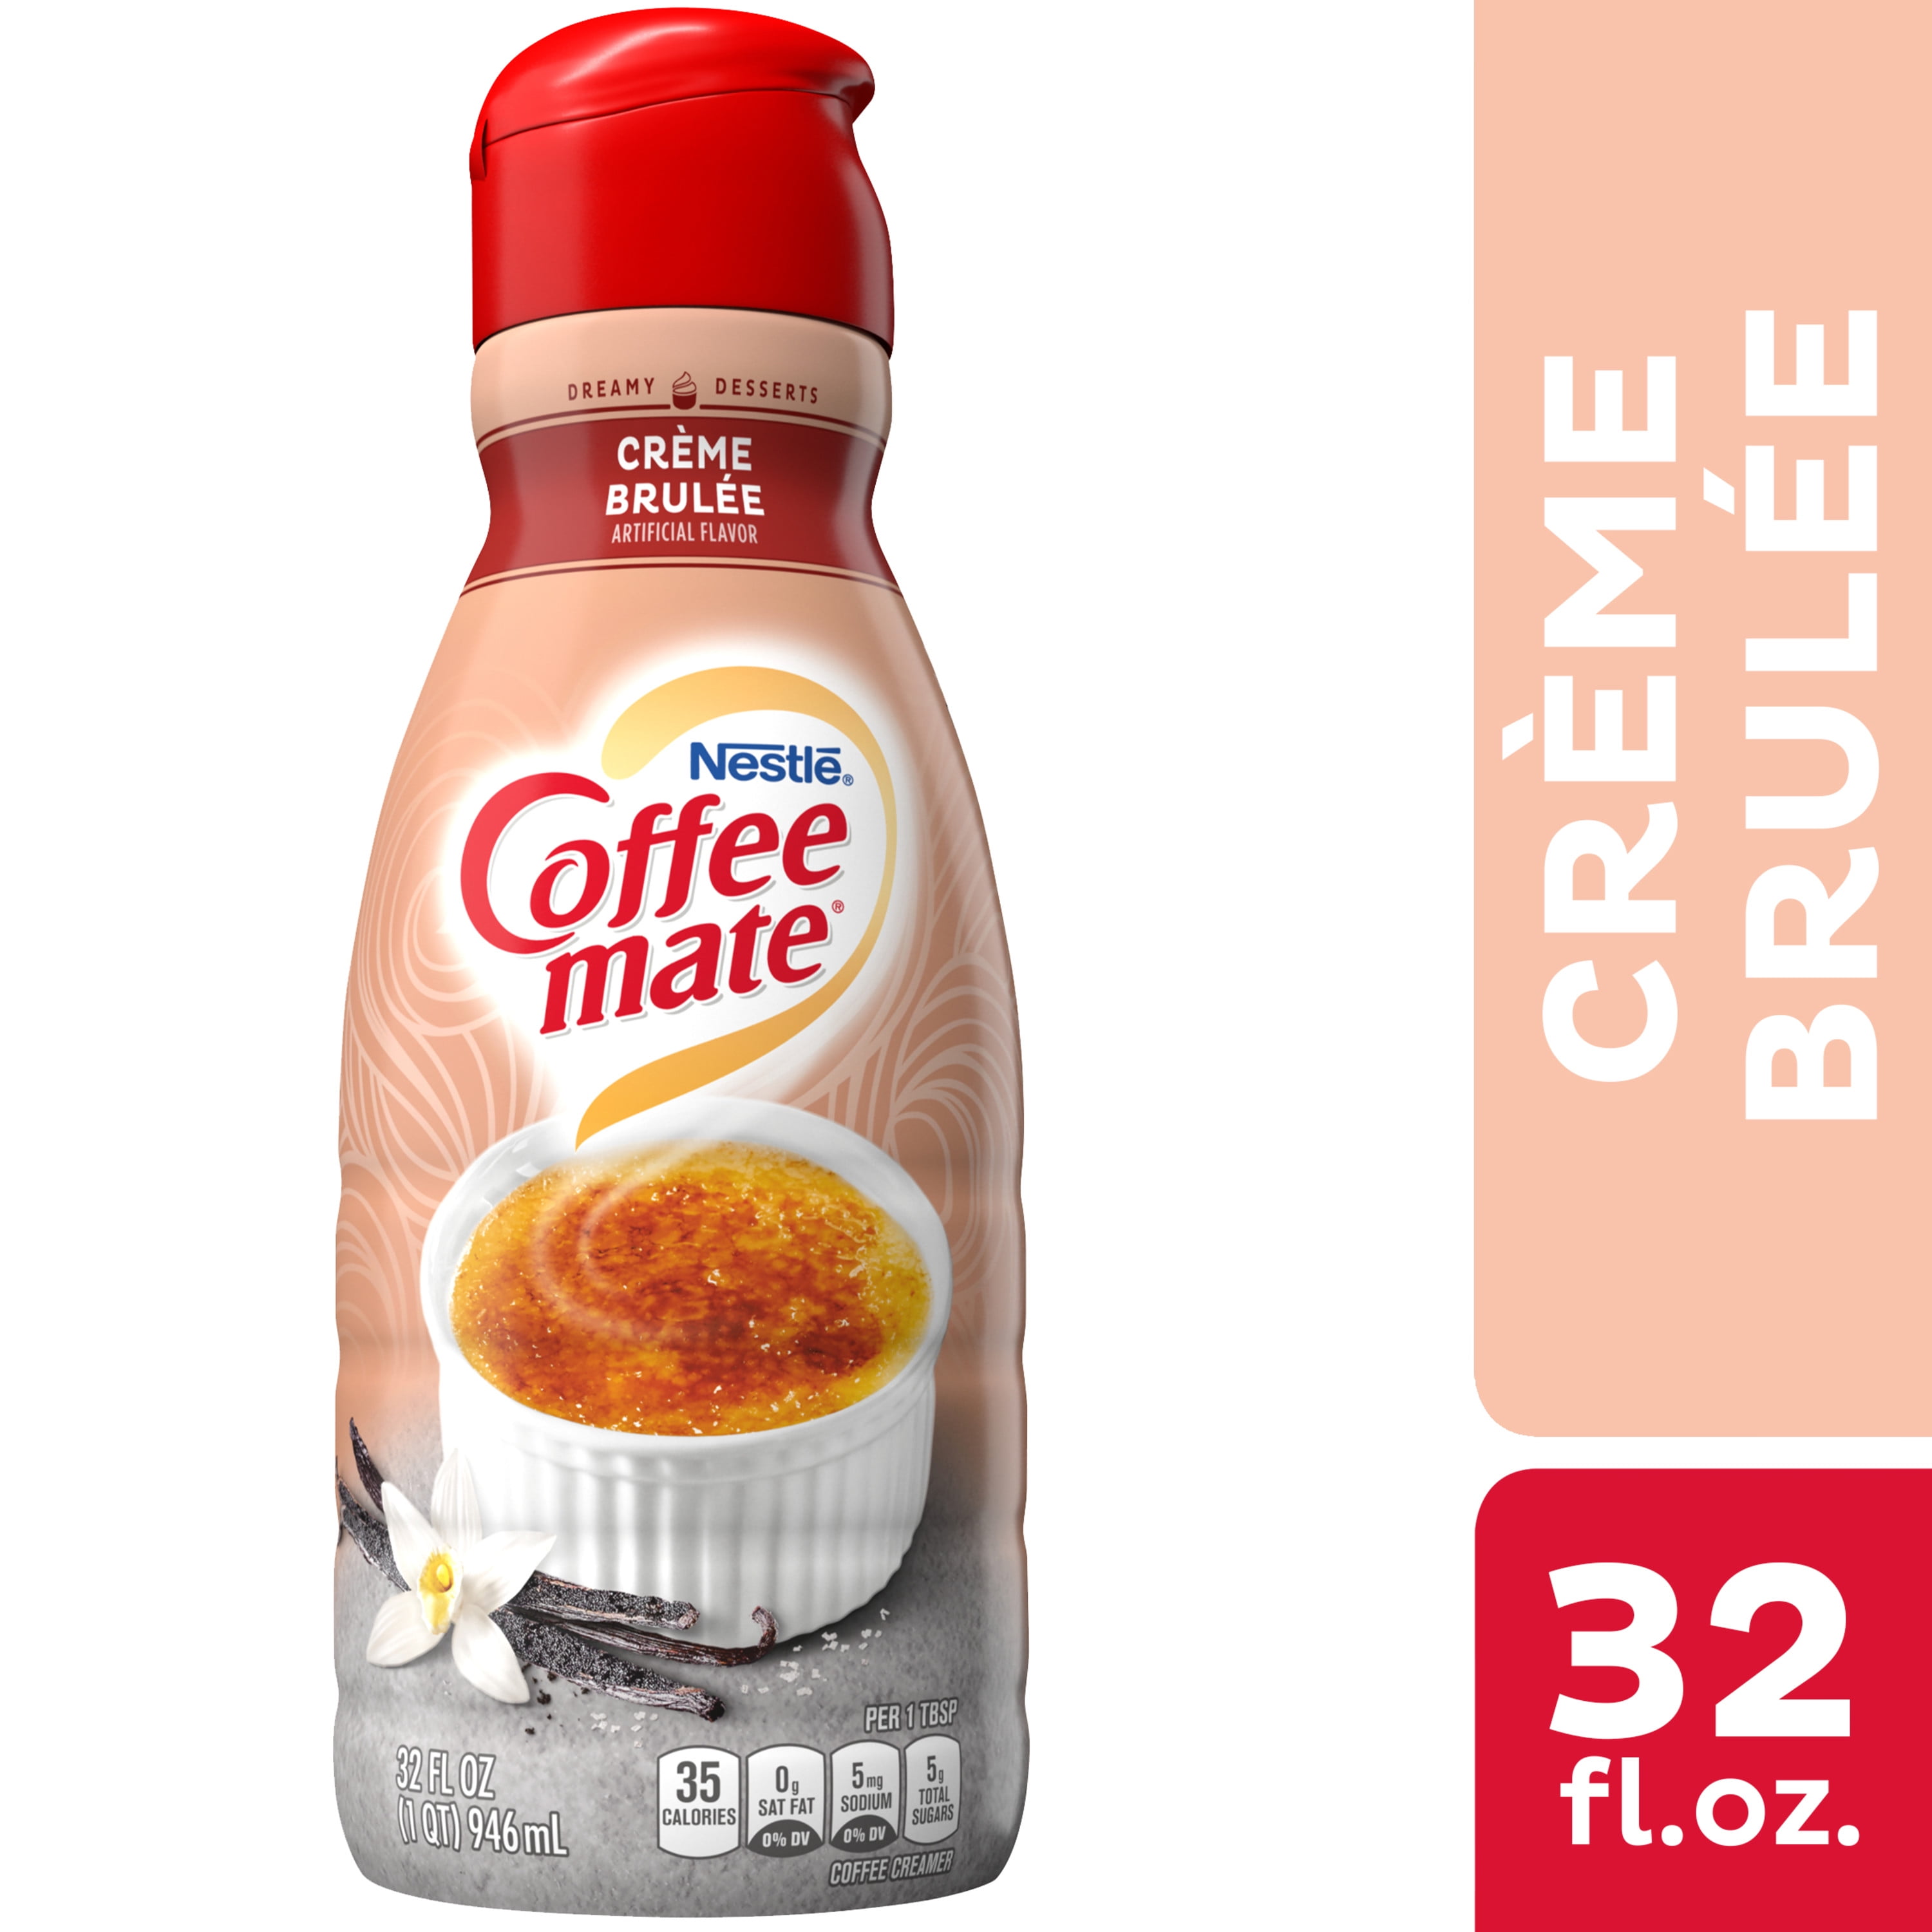 Nestle Coffee mate Creme Brulee Liquid Coffee Creamer 32 fl oz